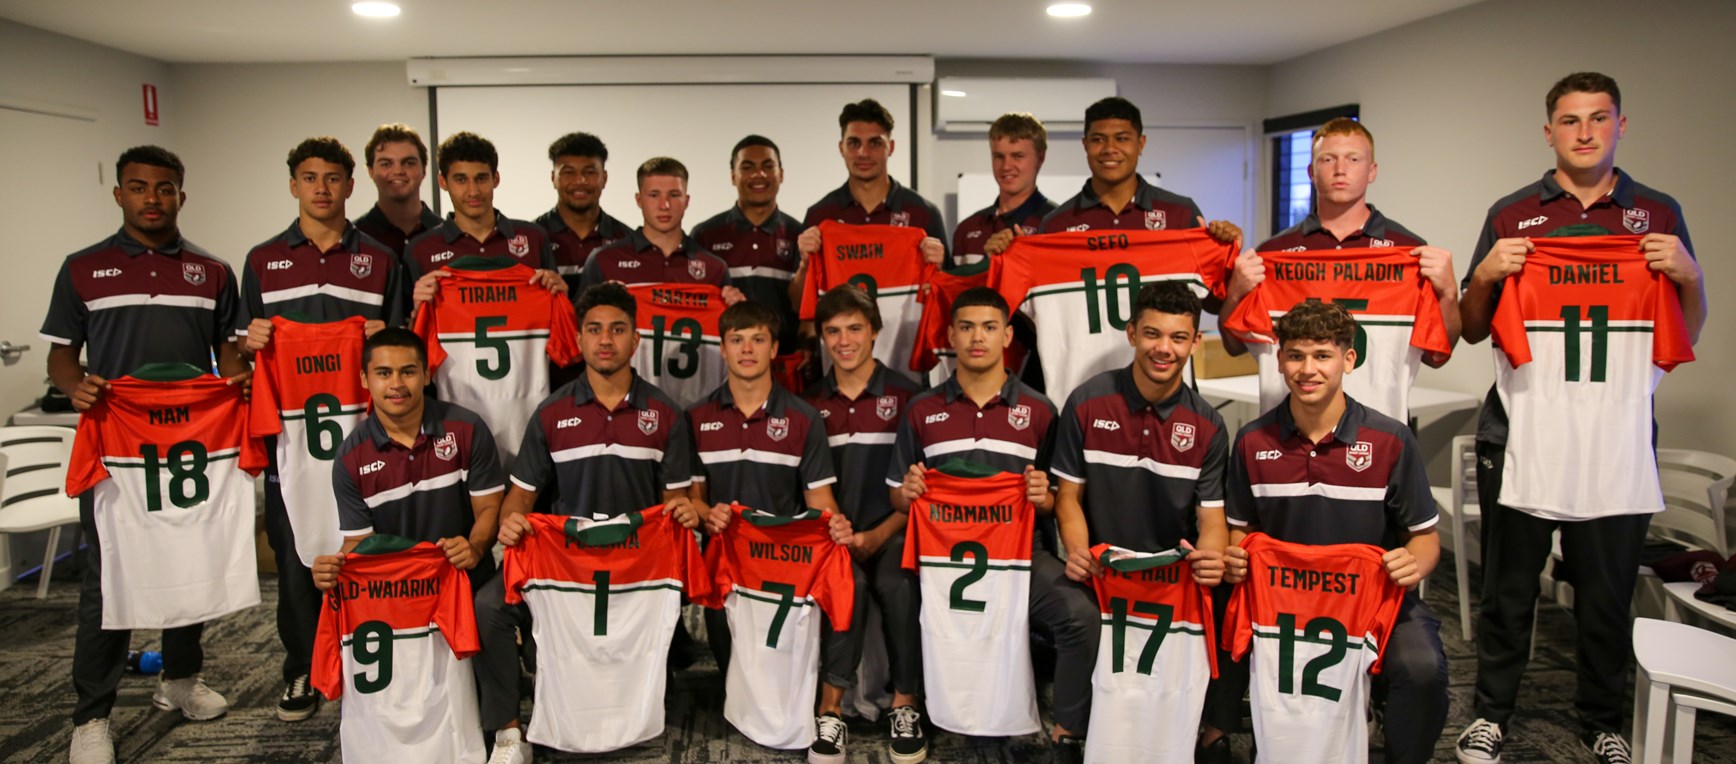 In pictures: Queensland Under 16 City jersey presentation